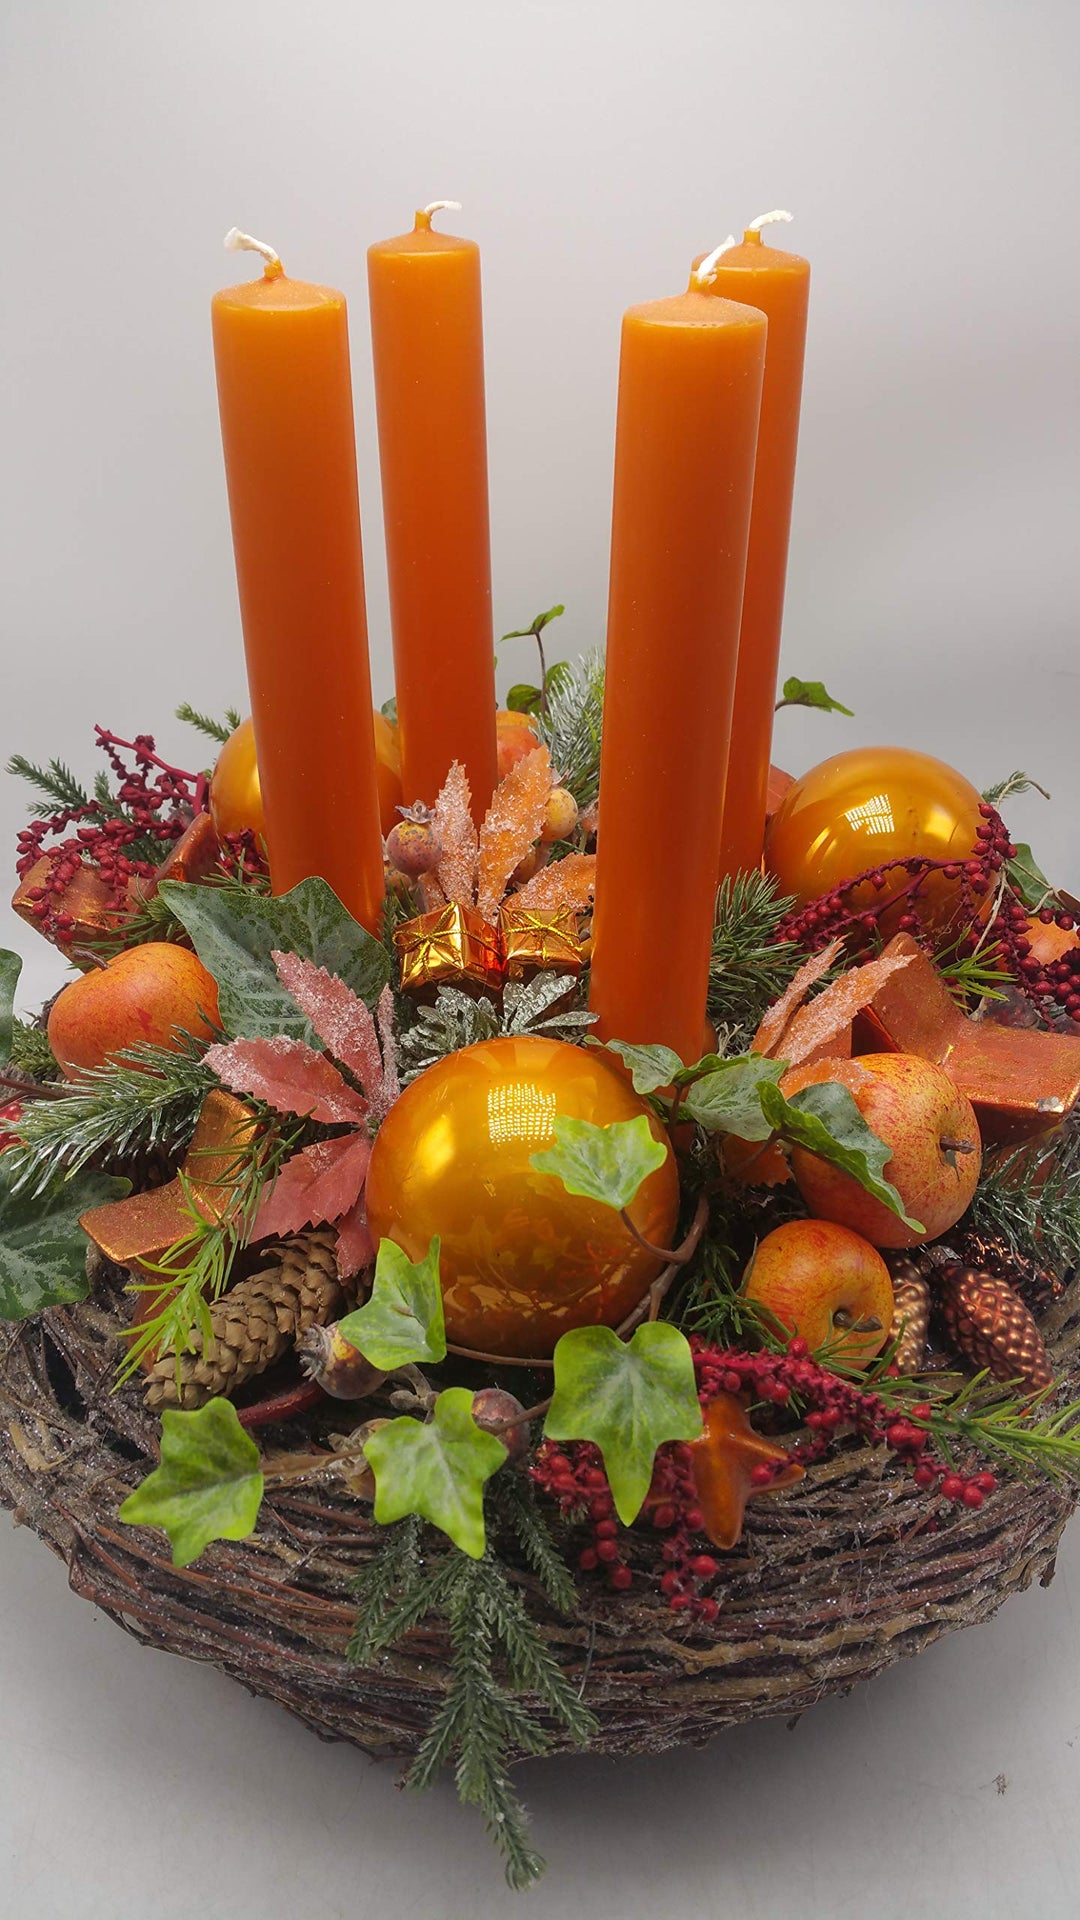 Weihnachtskranz Seidenblumengesteck Adventskranz Kerzen Kugeln Äpfel Efeu XXL